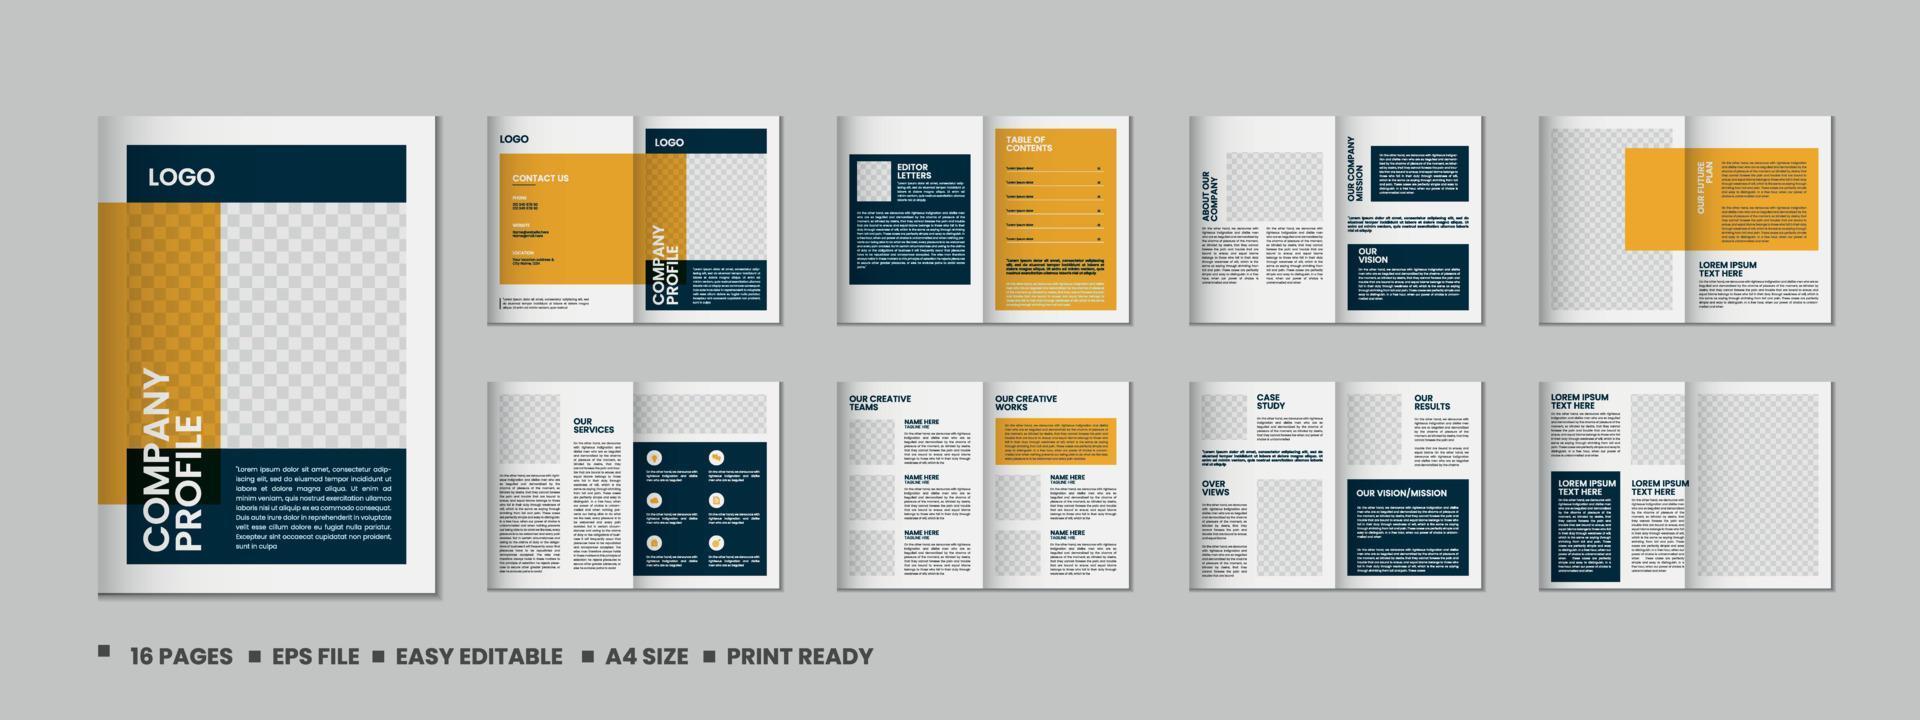 empresa perfil, dieciséis paginas portafolio revista y a4 de múltiples fines arquitectura folleto modelo diseño vector